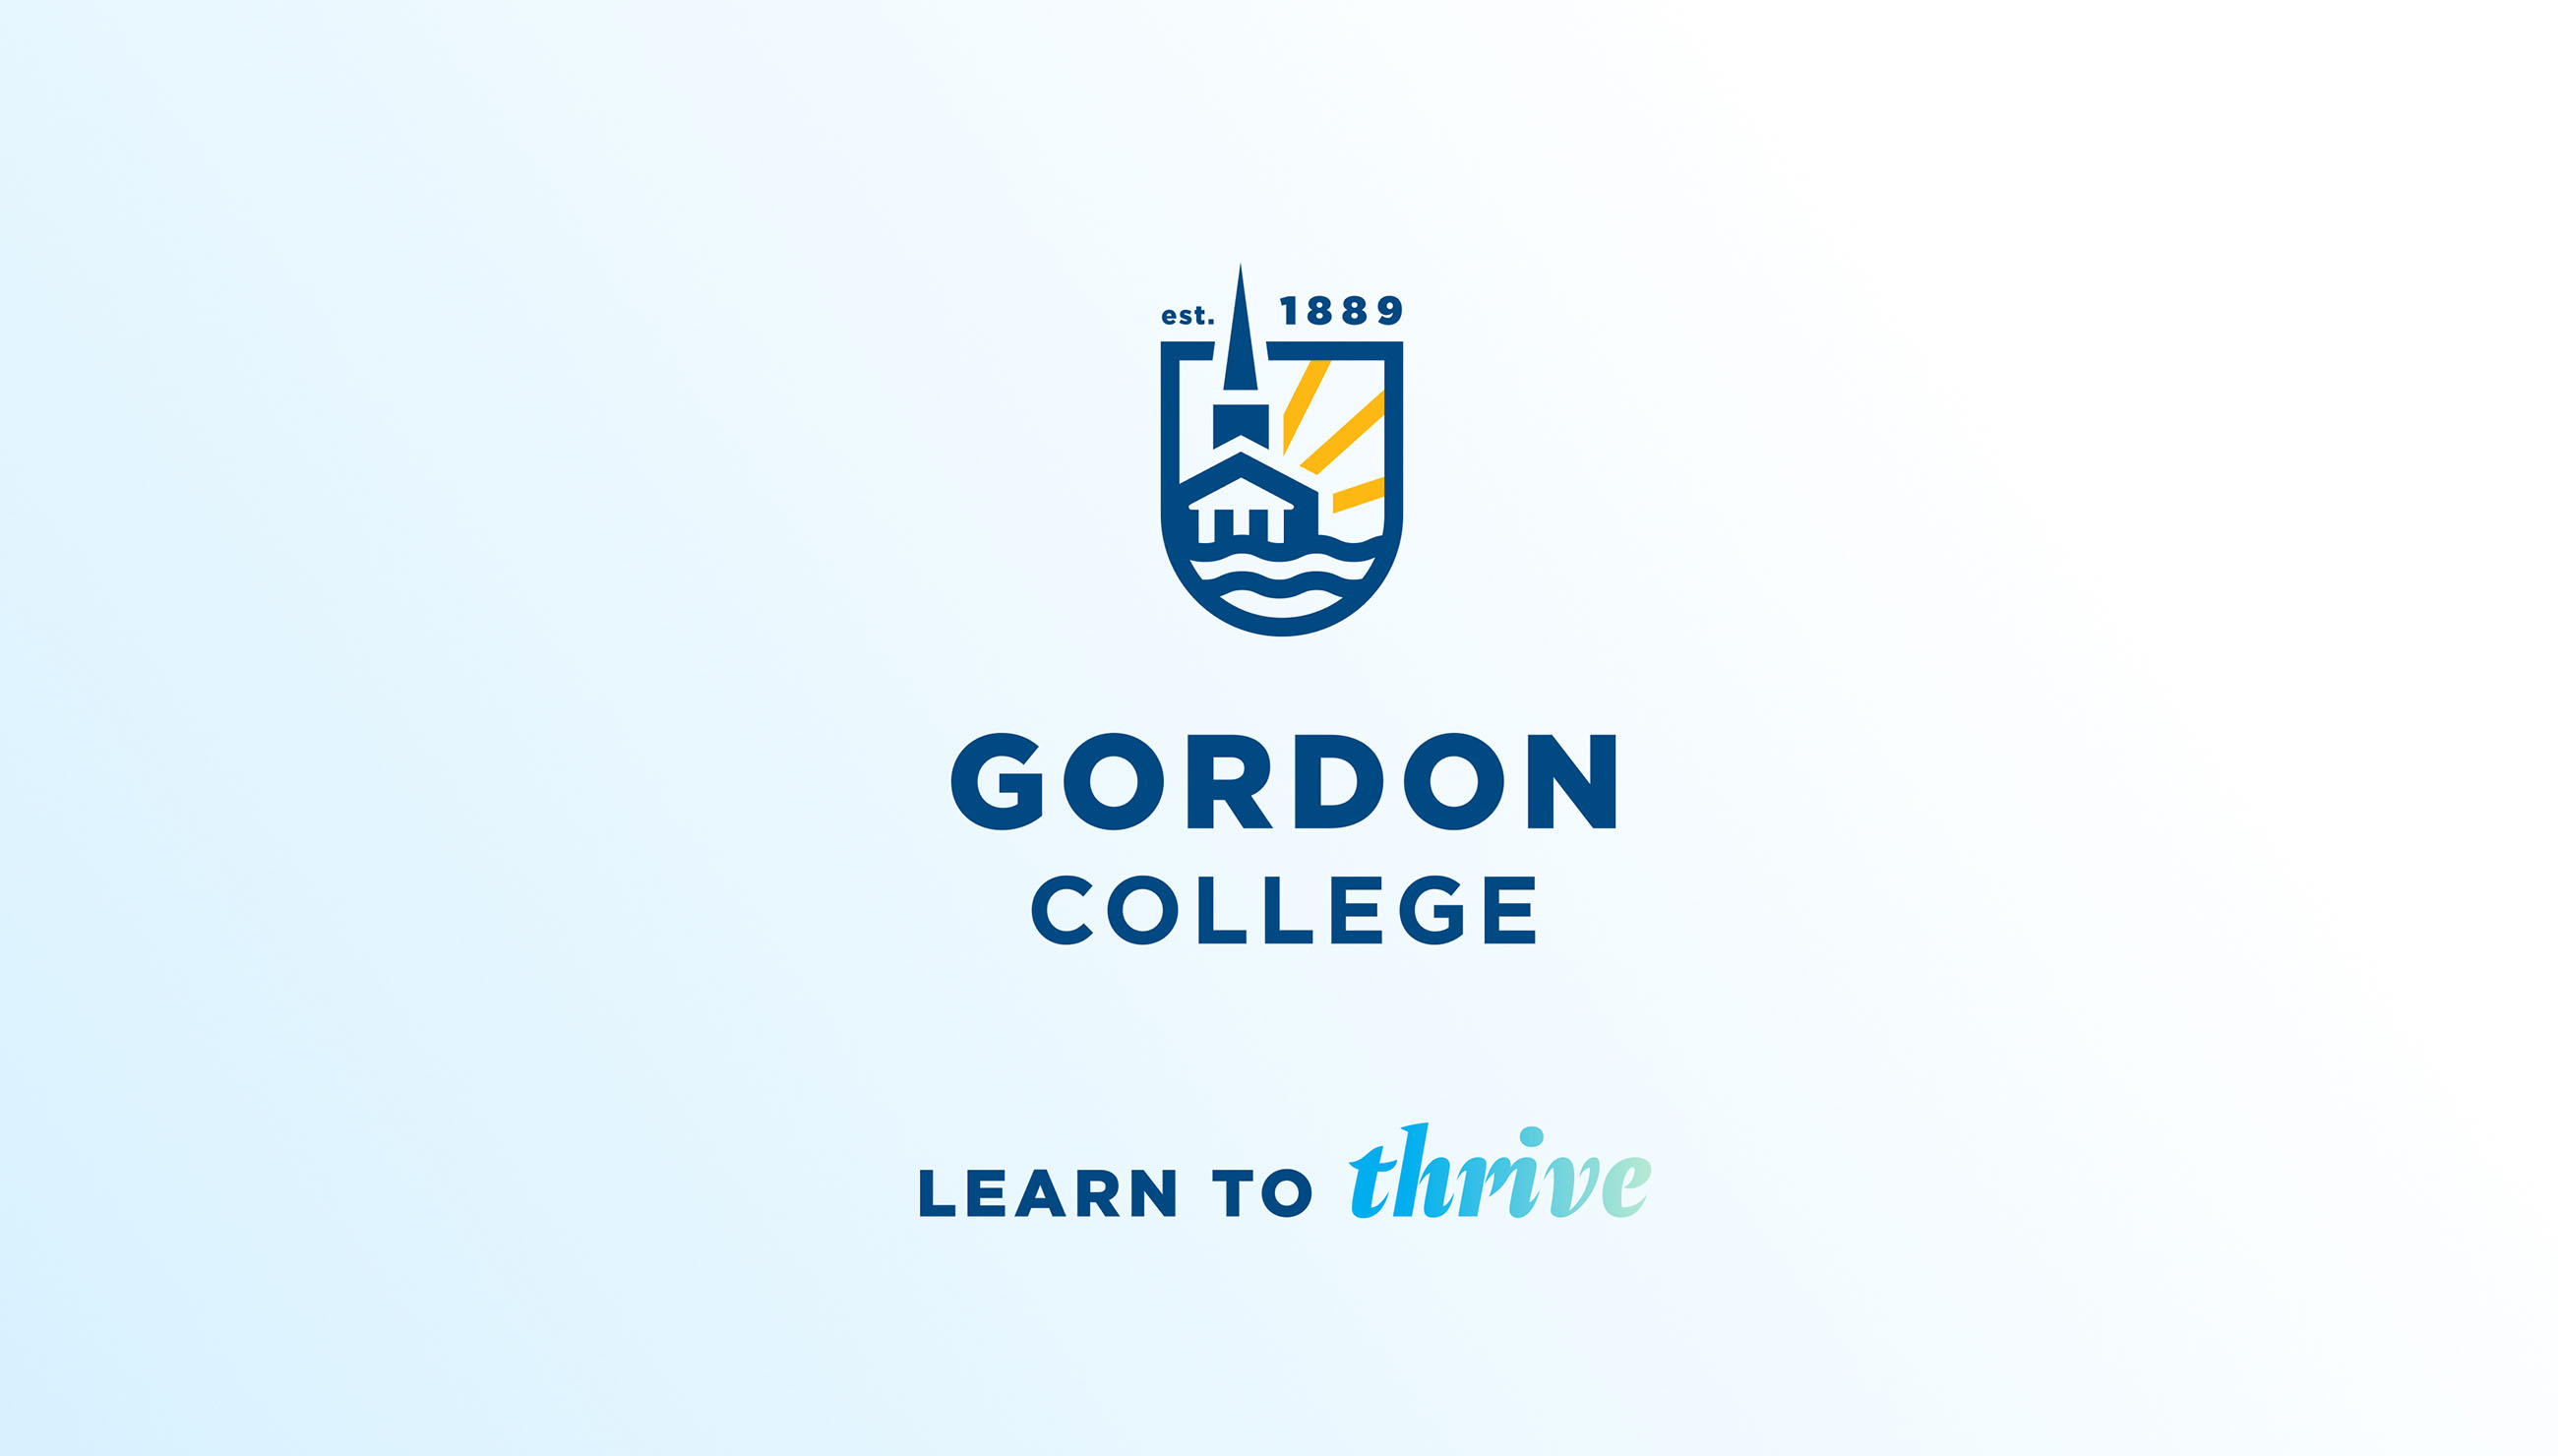 Gordon logo and tagline